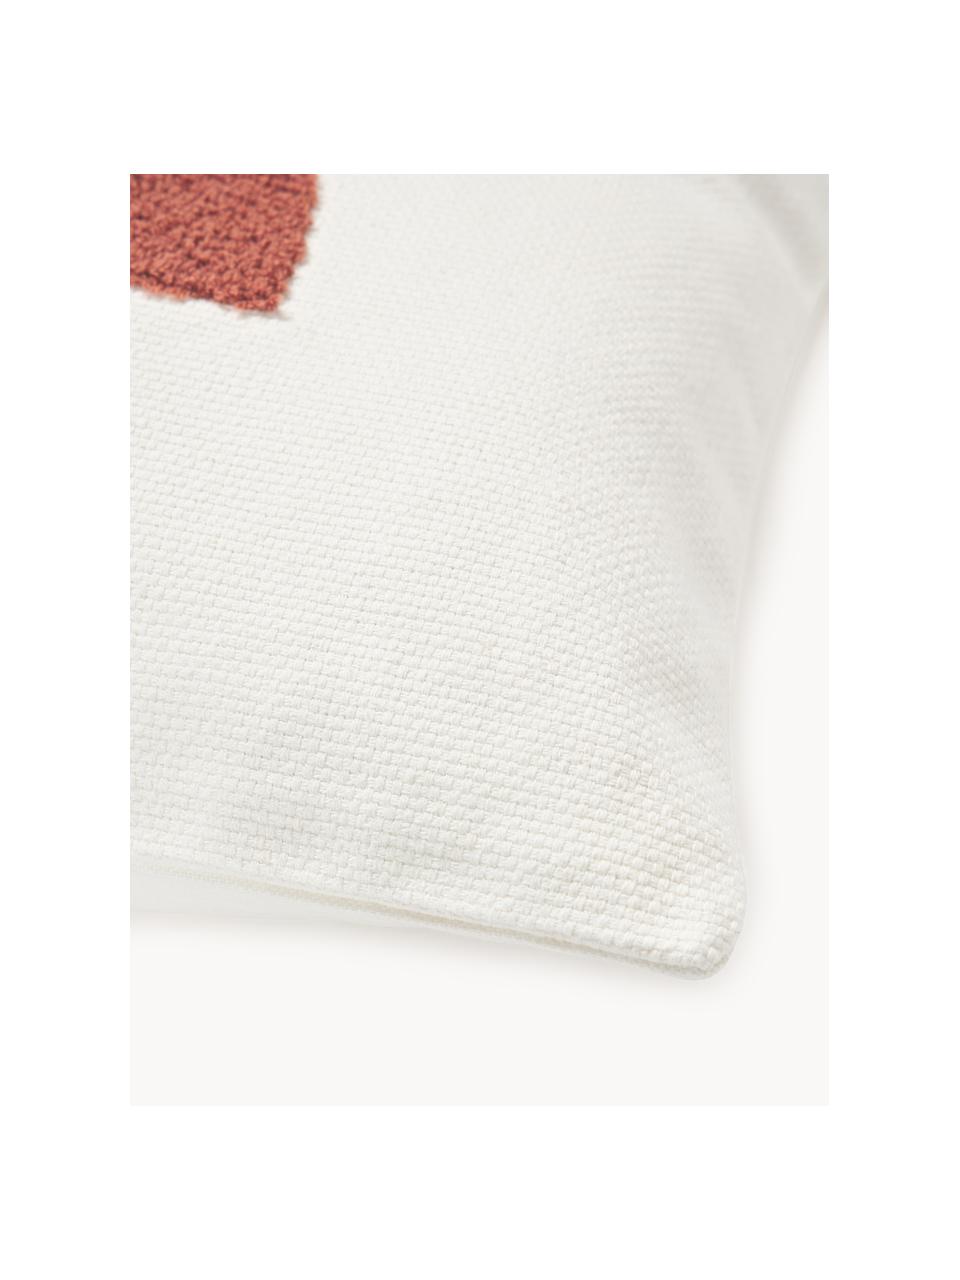 Funda de cojín bordada de algodón con tejido capitoné Izad, Exterior: 100% algodón Adorno, Blanco Off White, rojo indio, mostaza, An 45 x L 45 cm